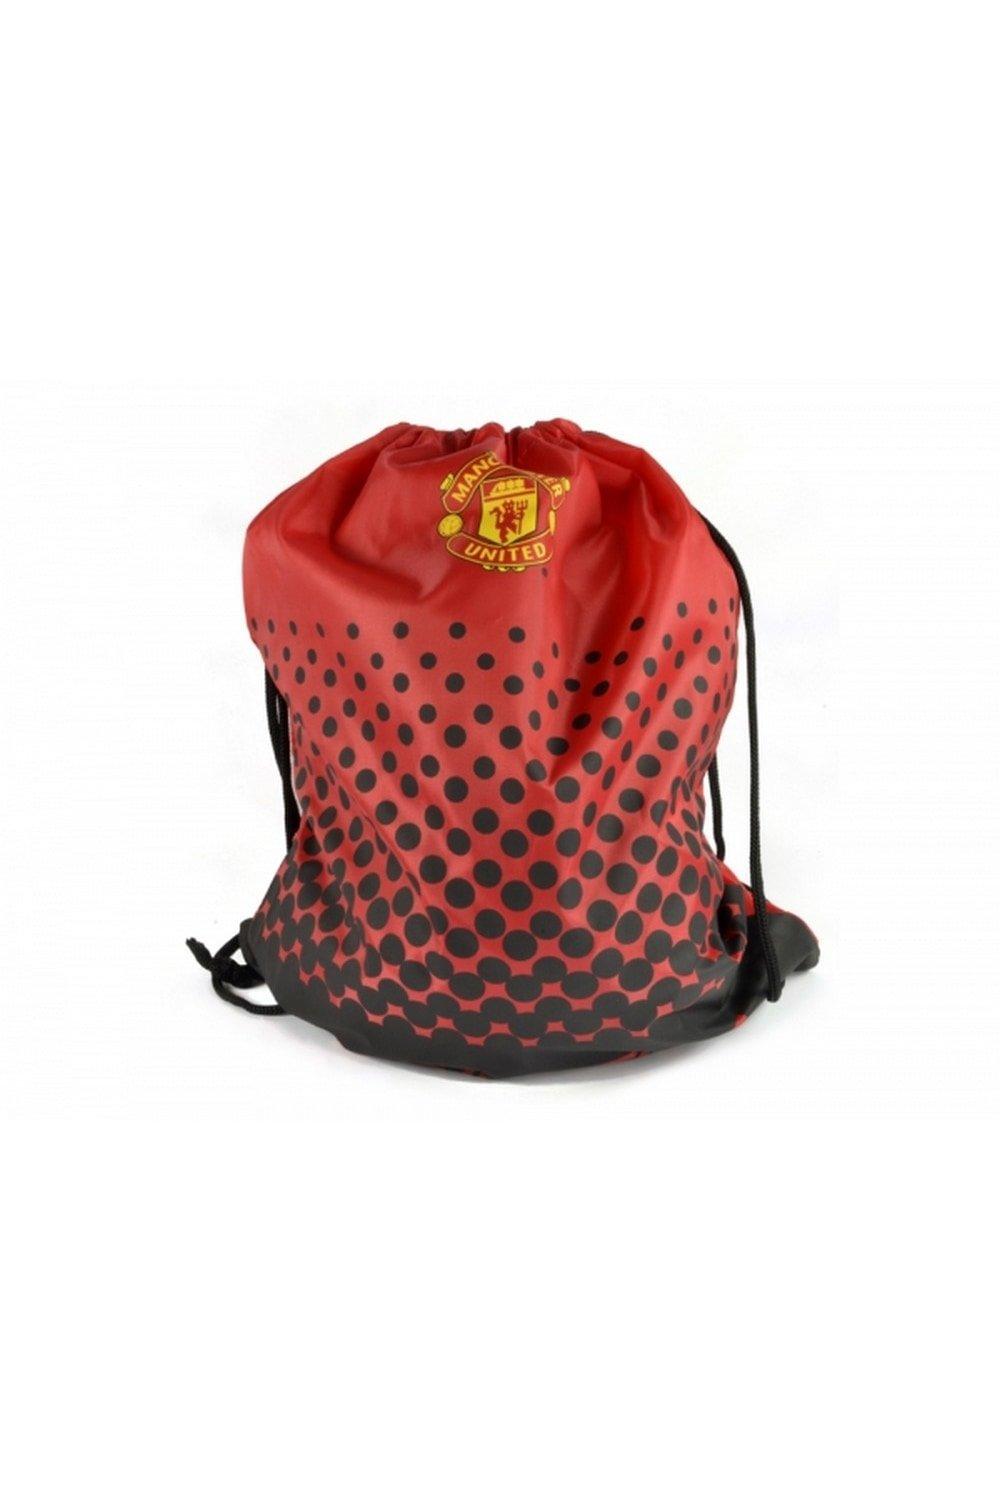 сумки на шнурке спортивная сумка рюкзак для тренажерного зала karma girls забавная новинка забавный графический рюкзак Спортивная сумка Манчестер Юнайтед Manchester United FC, красный